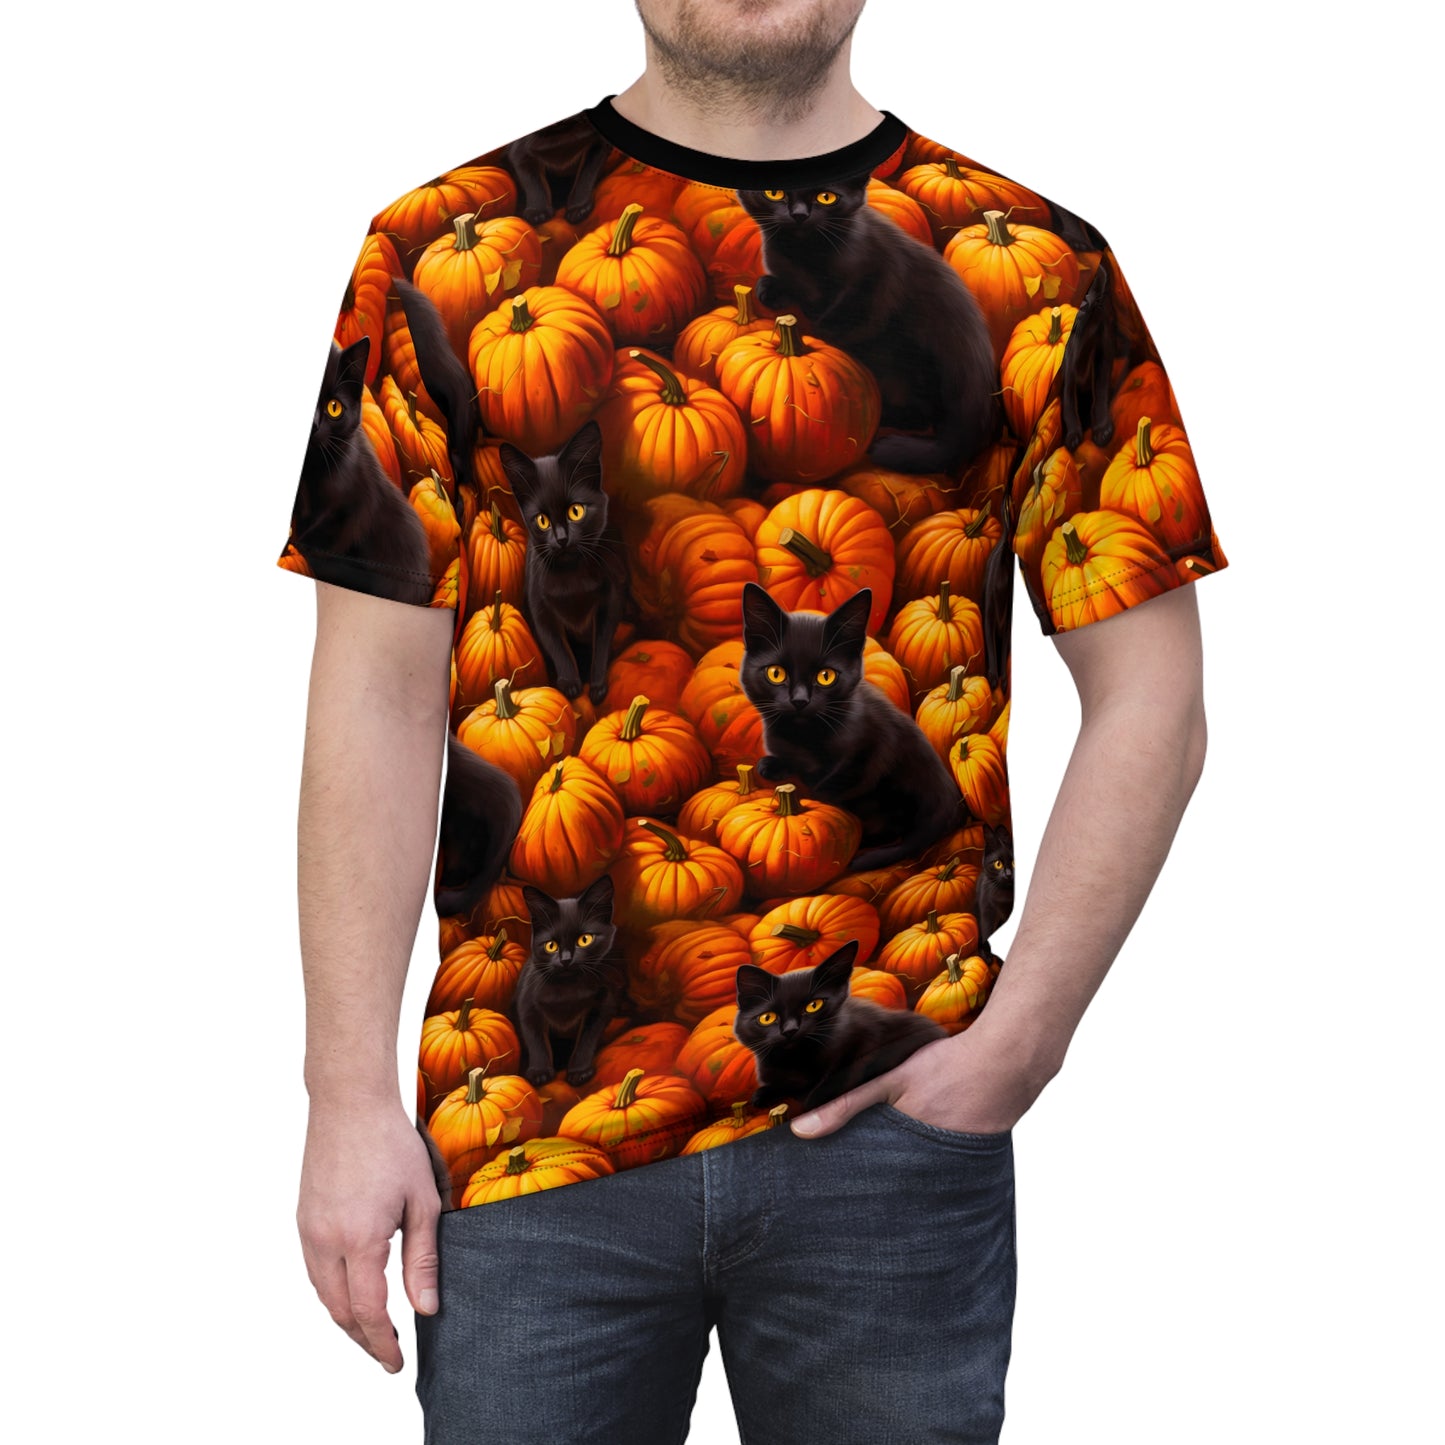 Black Kittens in the Pumpkin Patch T-Shirt by Studio Ten Design